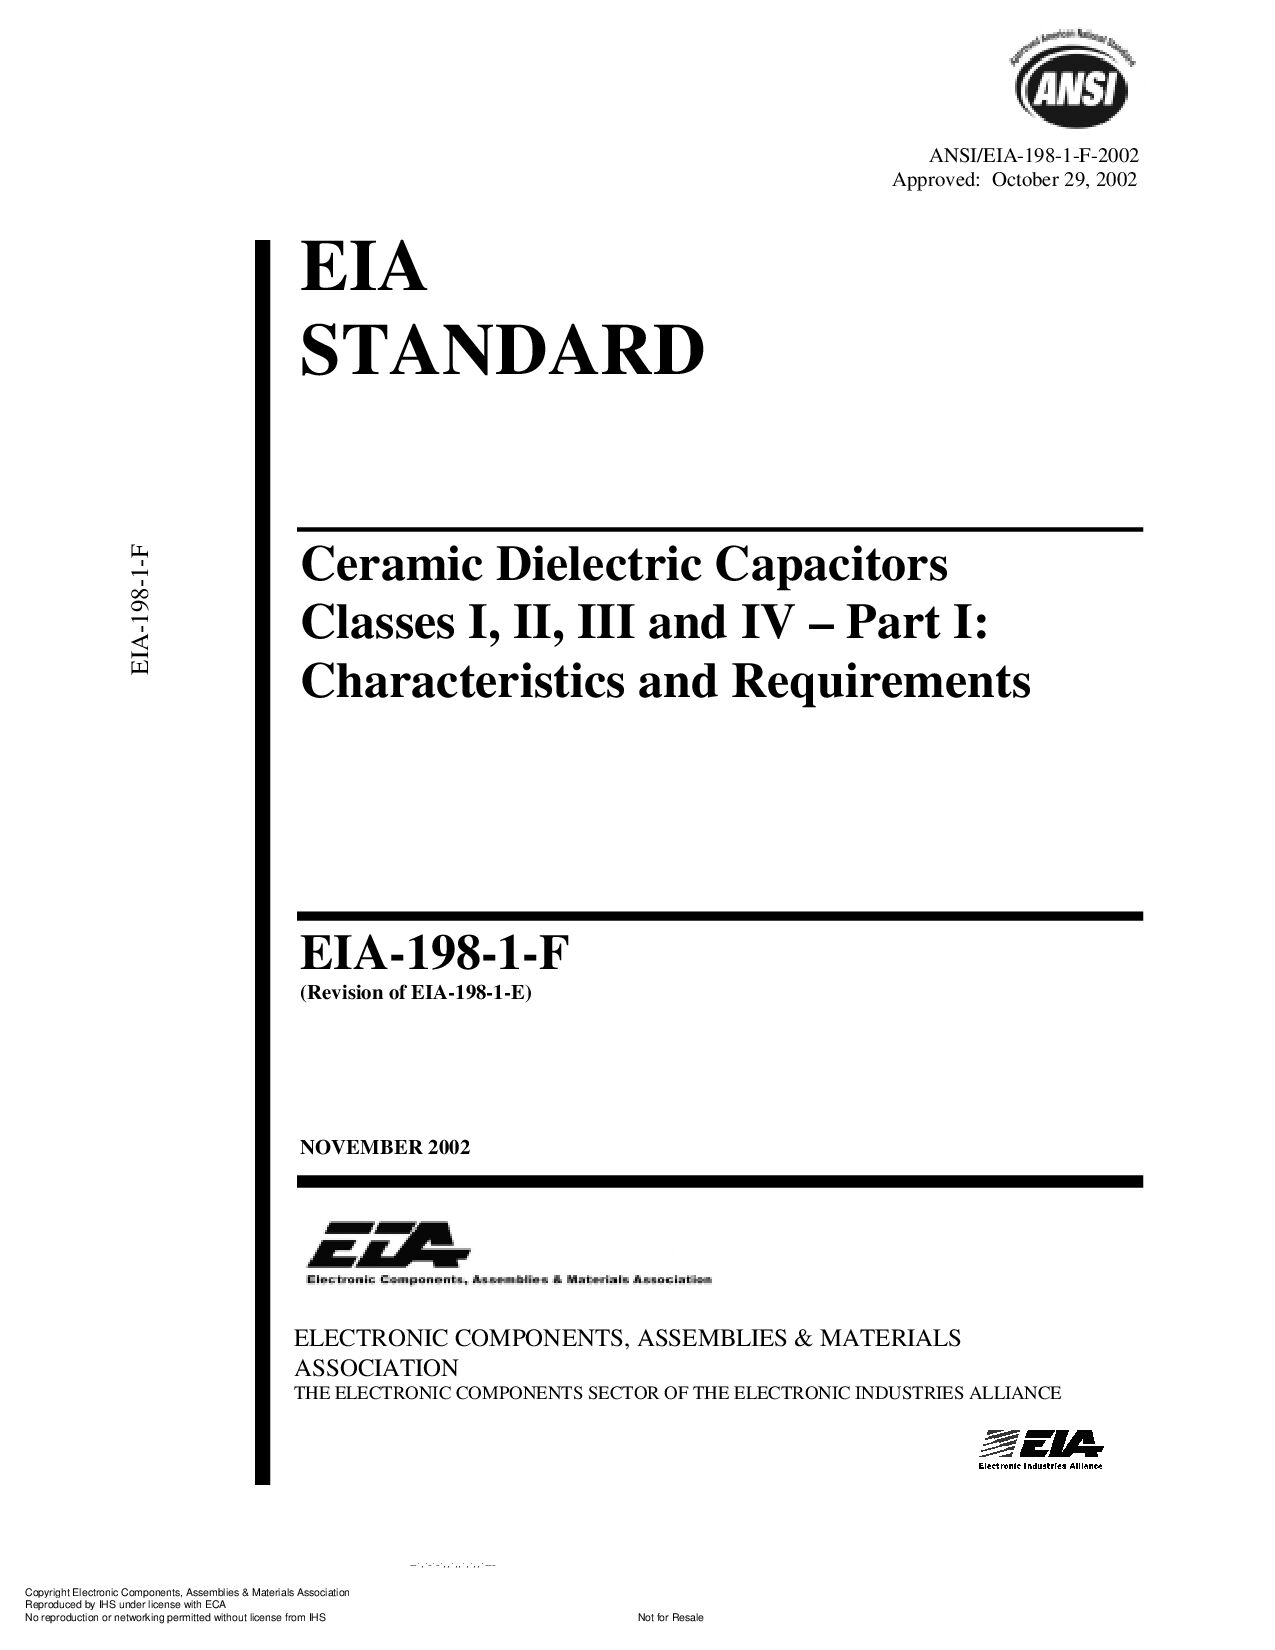 ANSI/EIA 198-1-F:2002